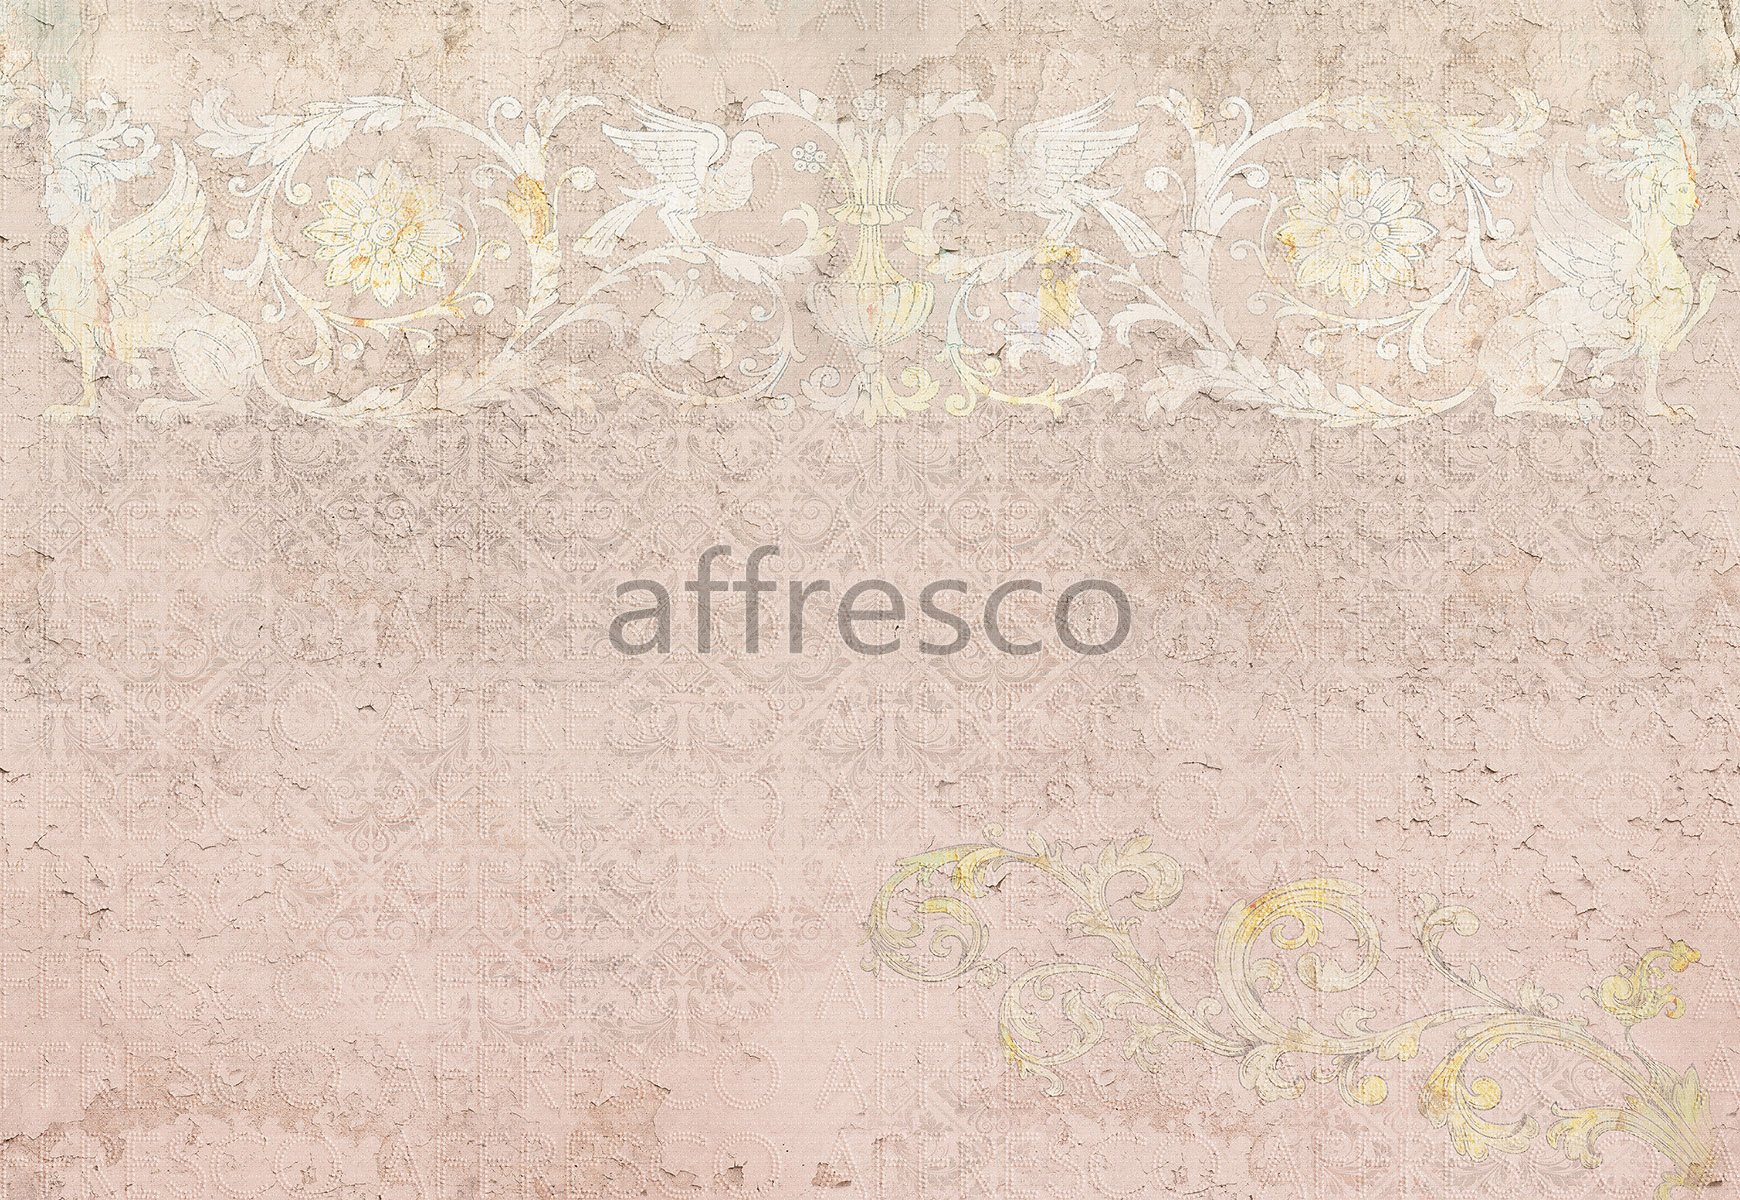 ID136183 | Textures |  | Affresco Factory